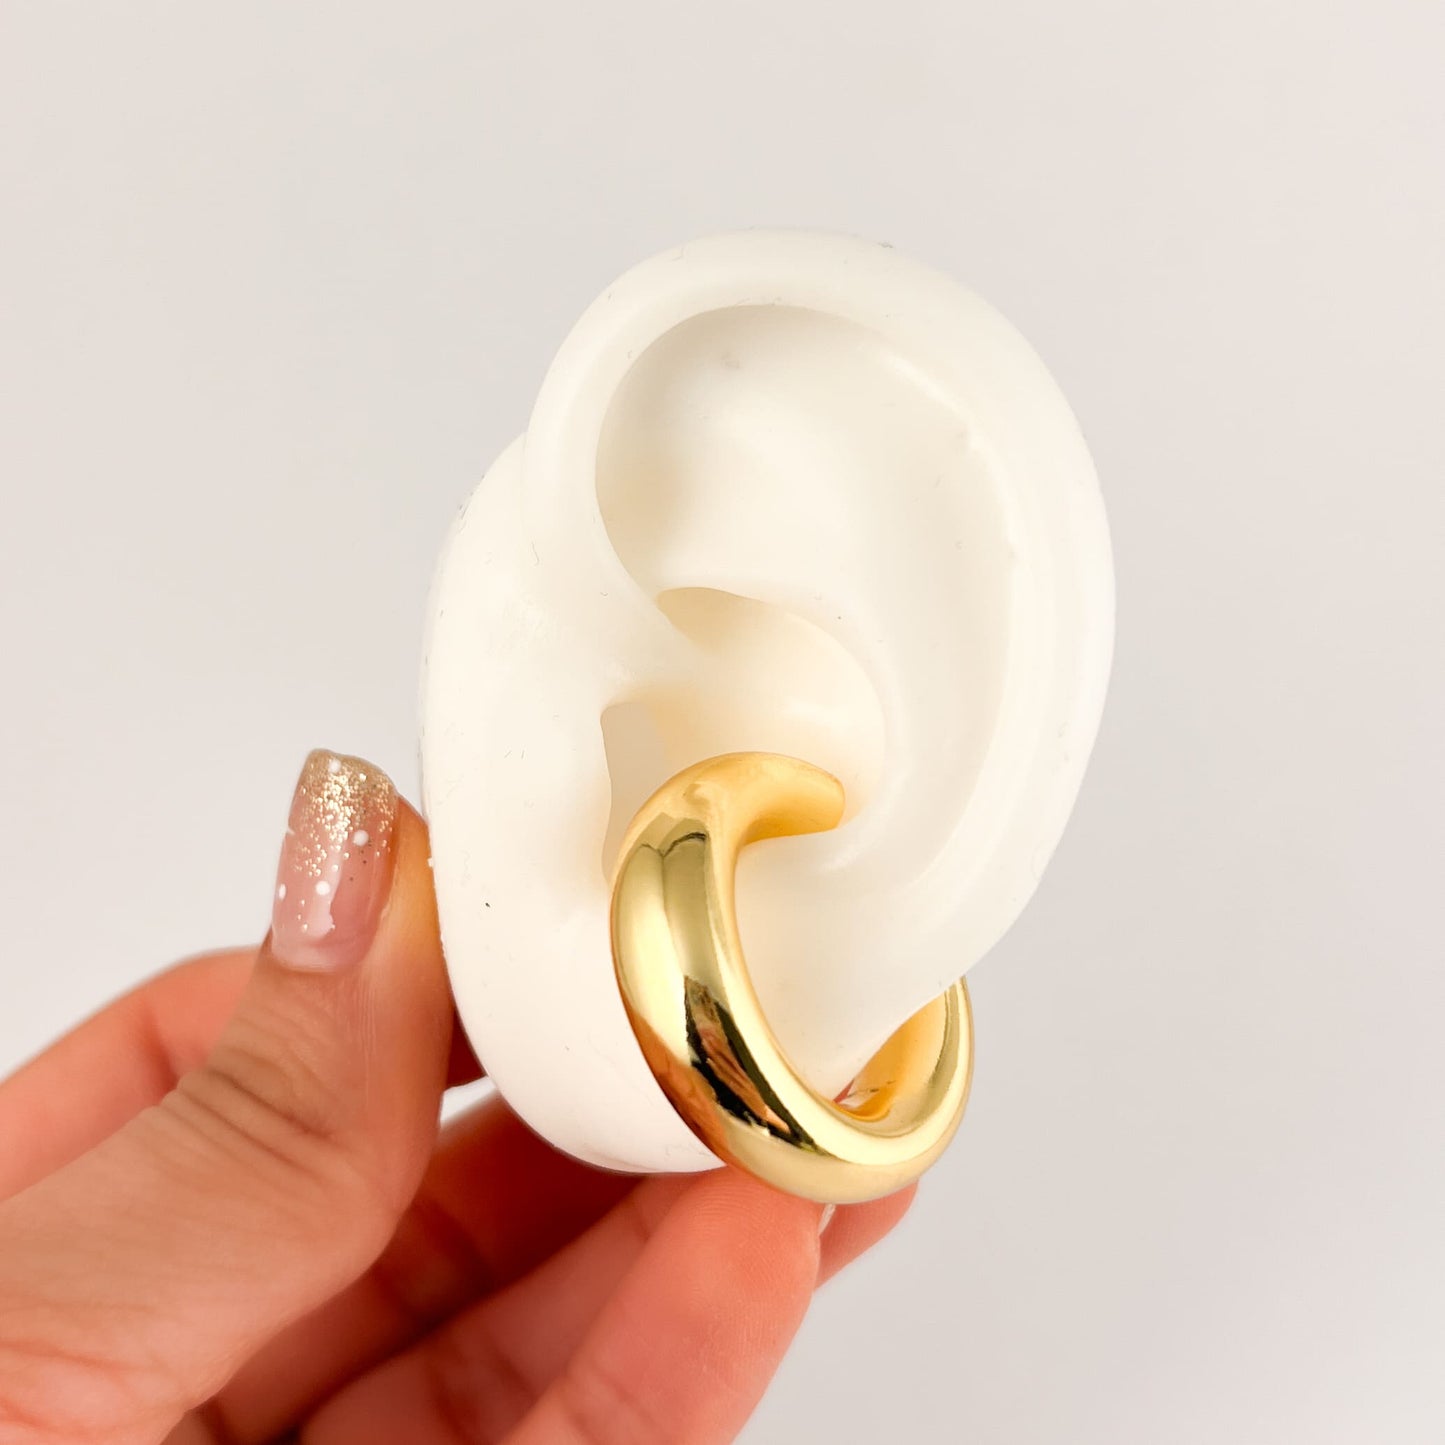 Ear cuff simulación de perforación chunky chico chapa de oro